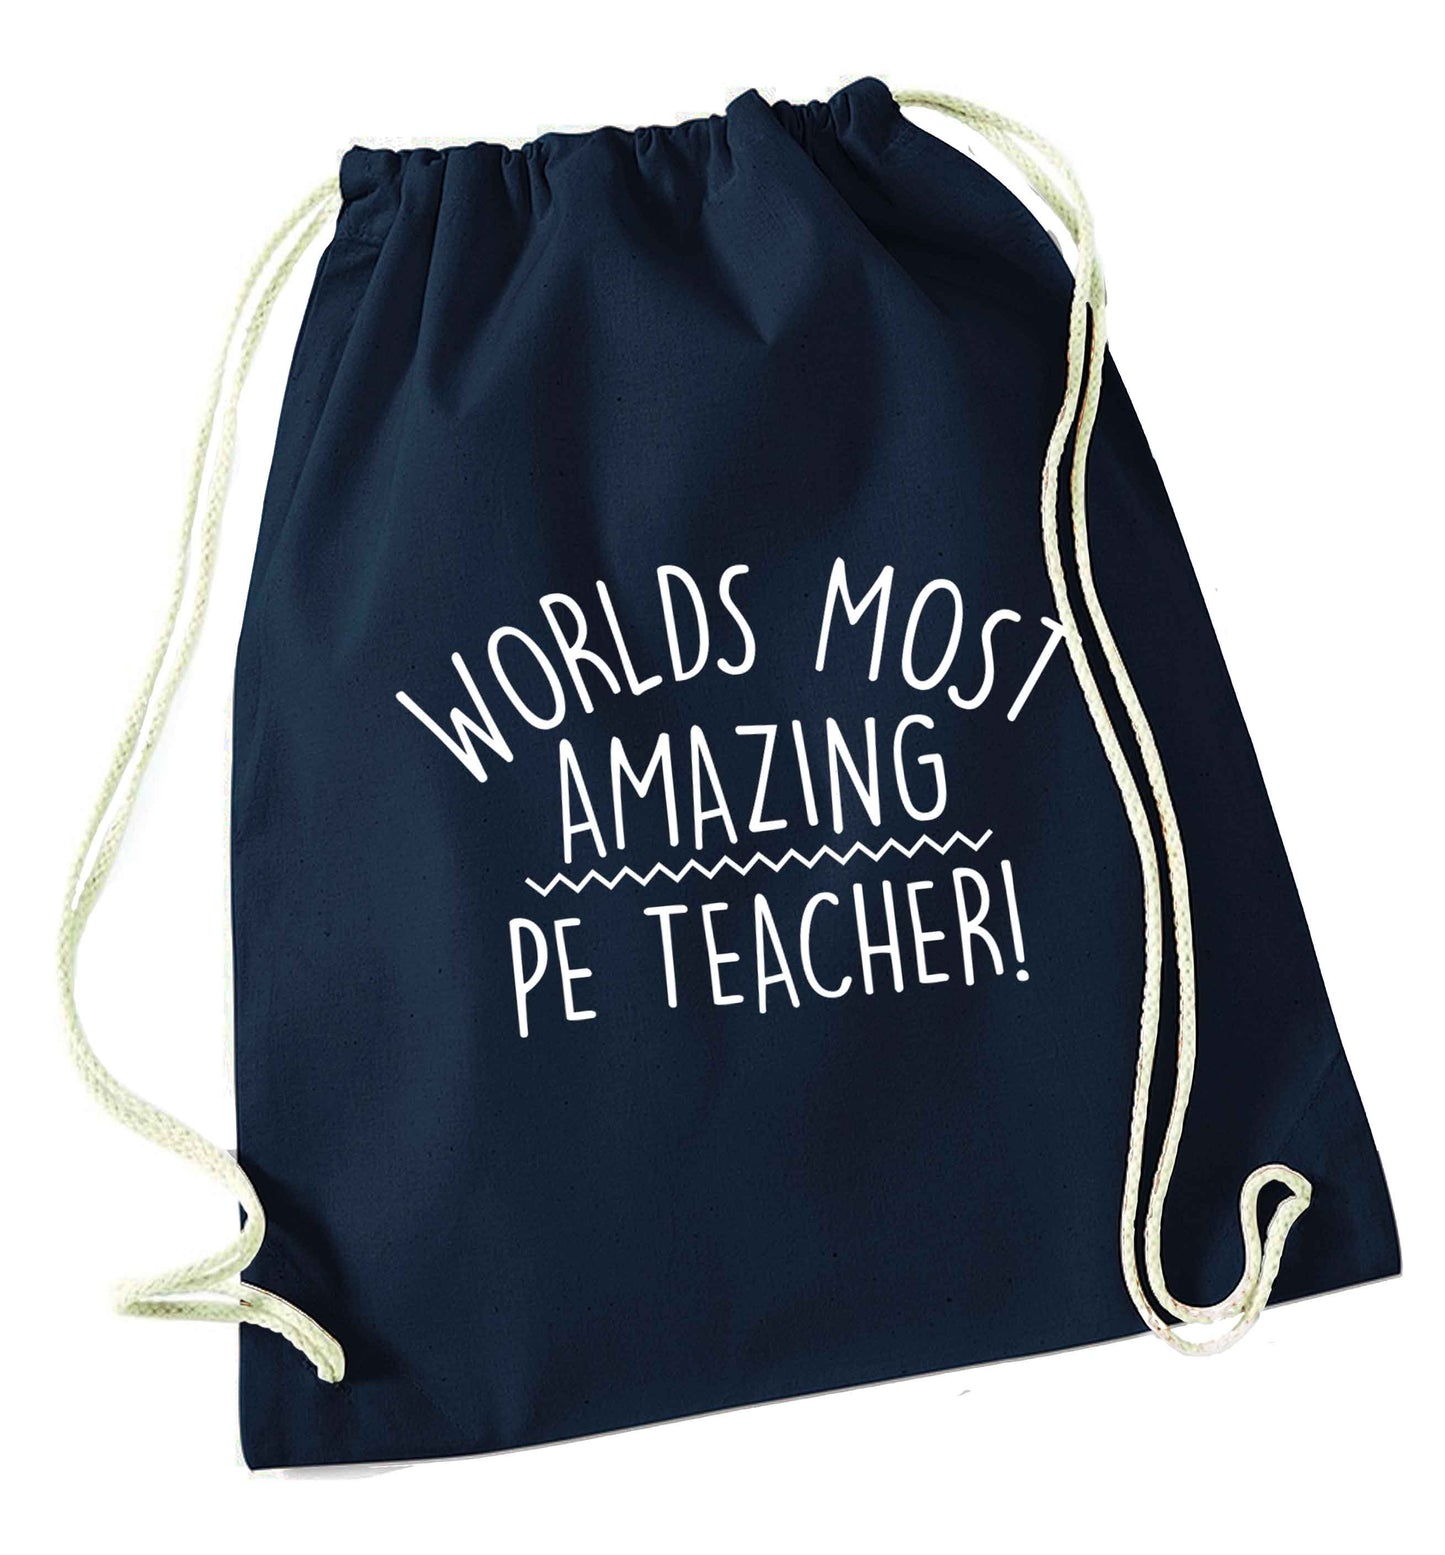 Worlds most amazing PE teacher navy drawstring bag